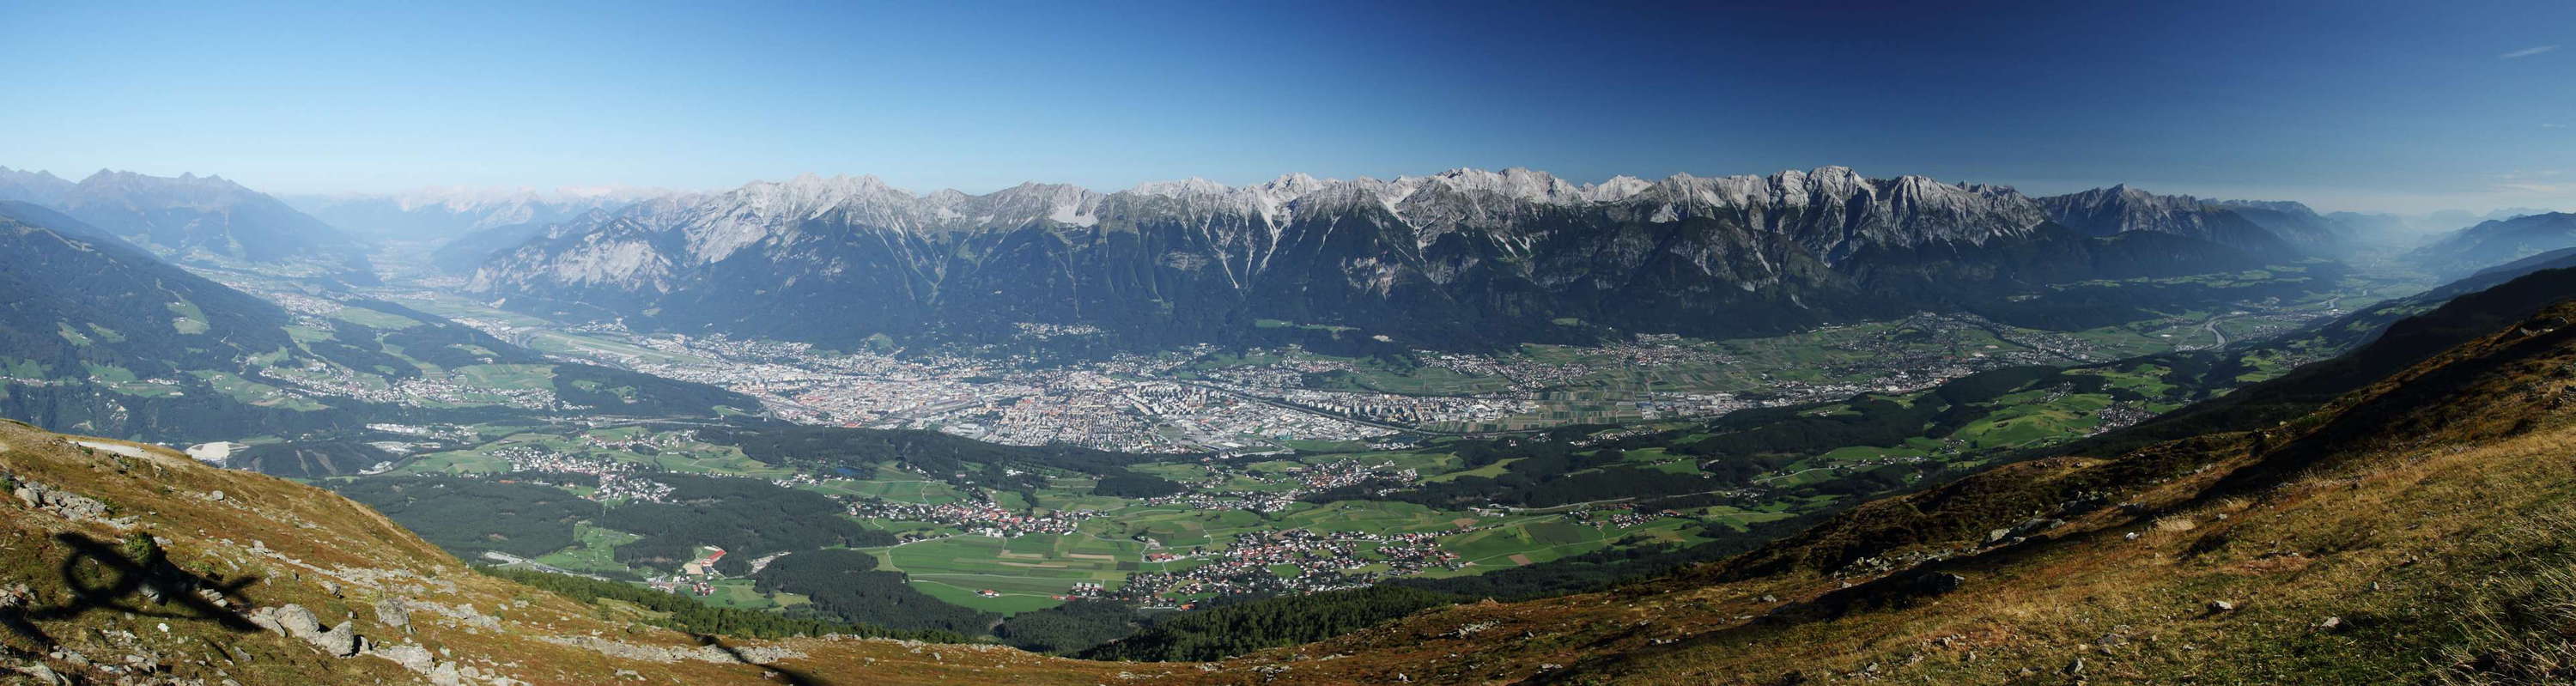 Inntal Valley panorama with Innsbruck